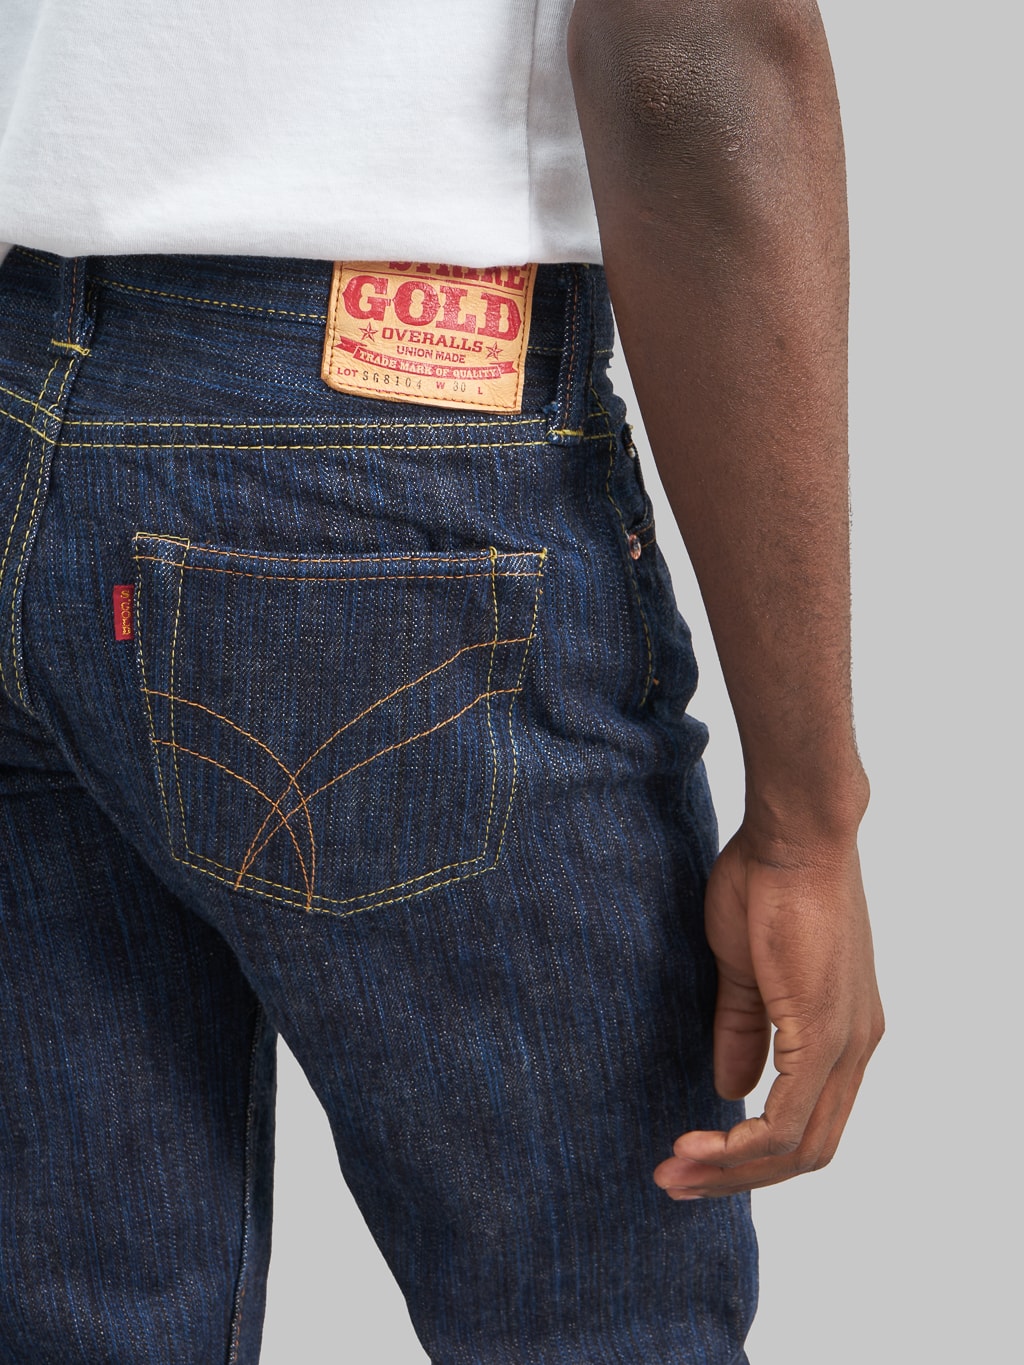 The Strike Gold 8104 Shower Slub straight tapered jeans back pocket